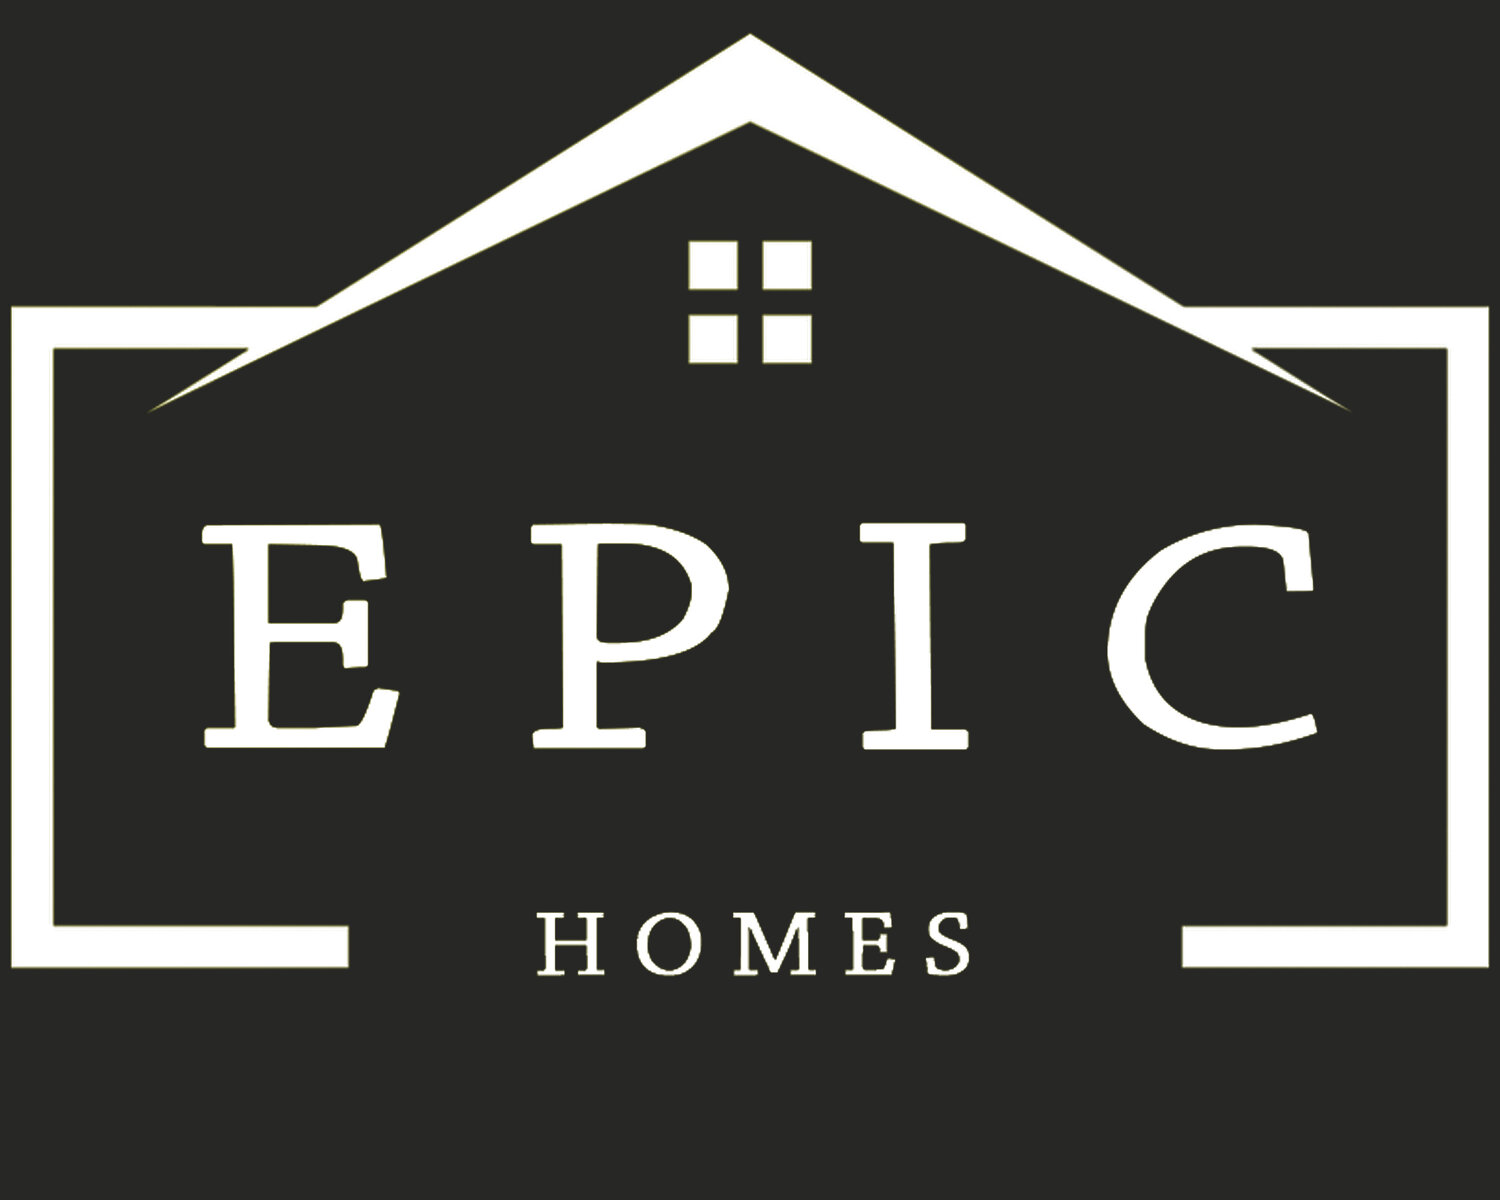 EpicHomes 